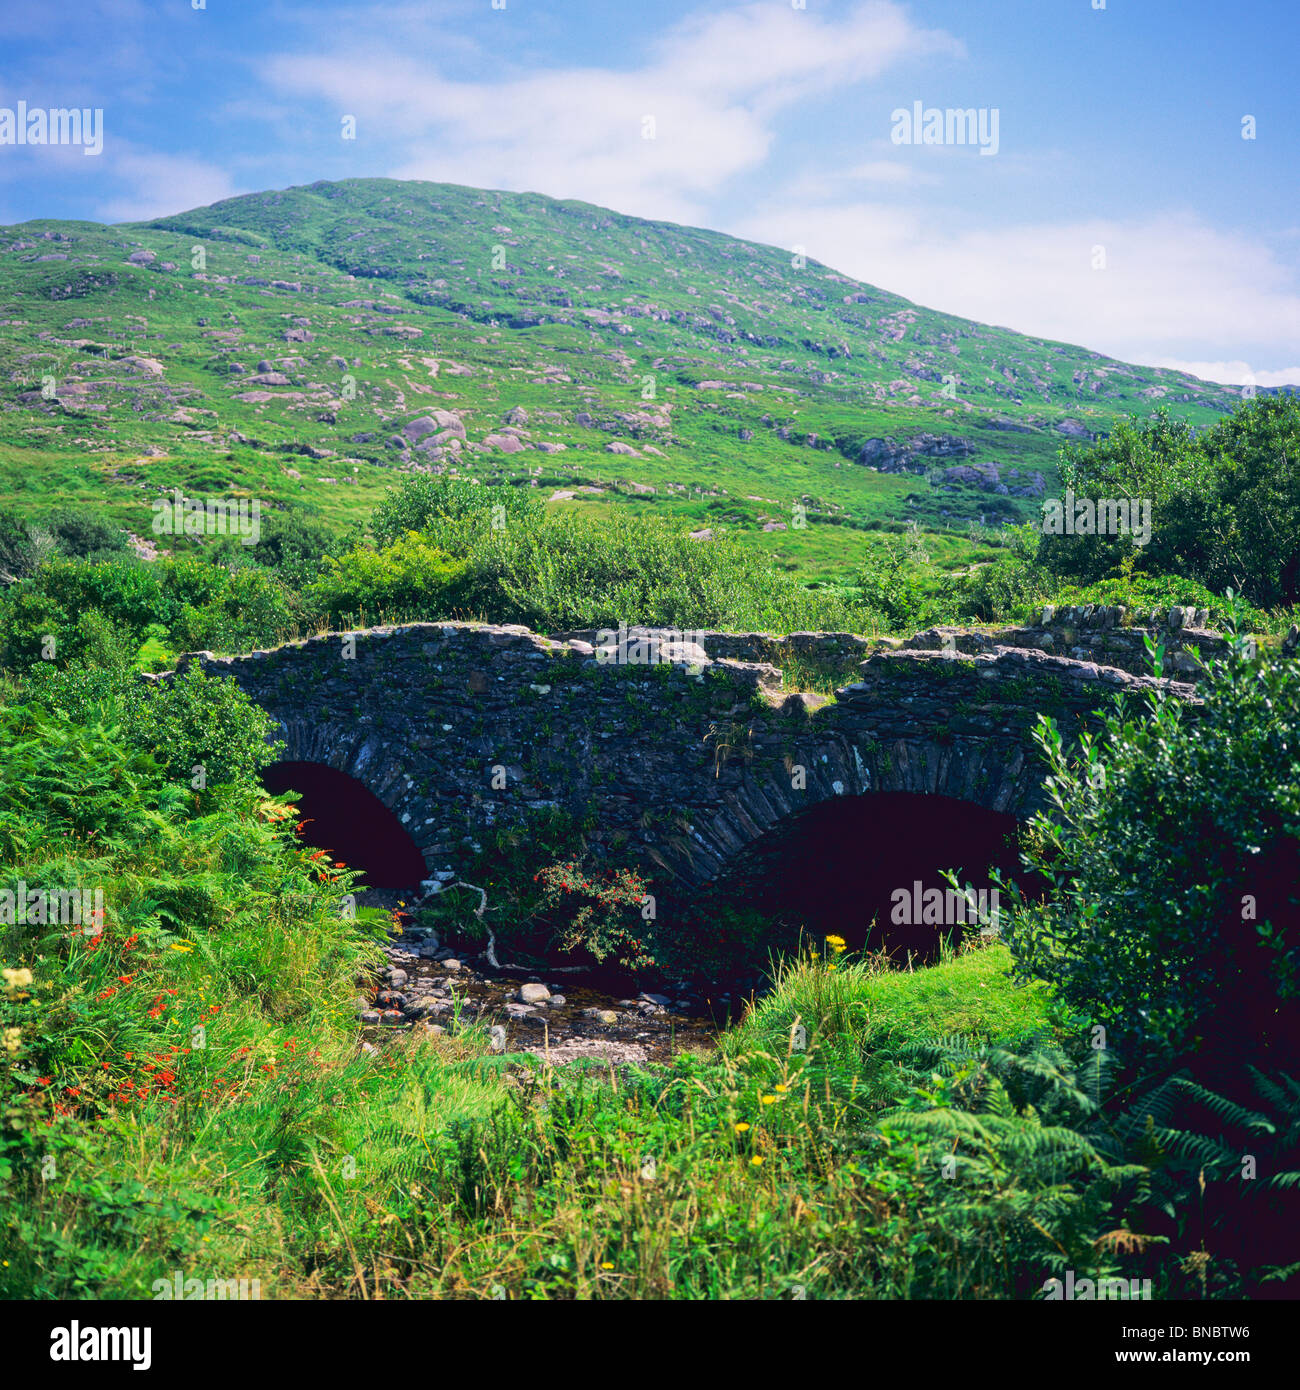 ANCIENT IRISH STONE BRIDGE NEAR STAIGUE FORT COUNTY KERRY IRELAND Stock Photo